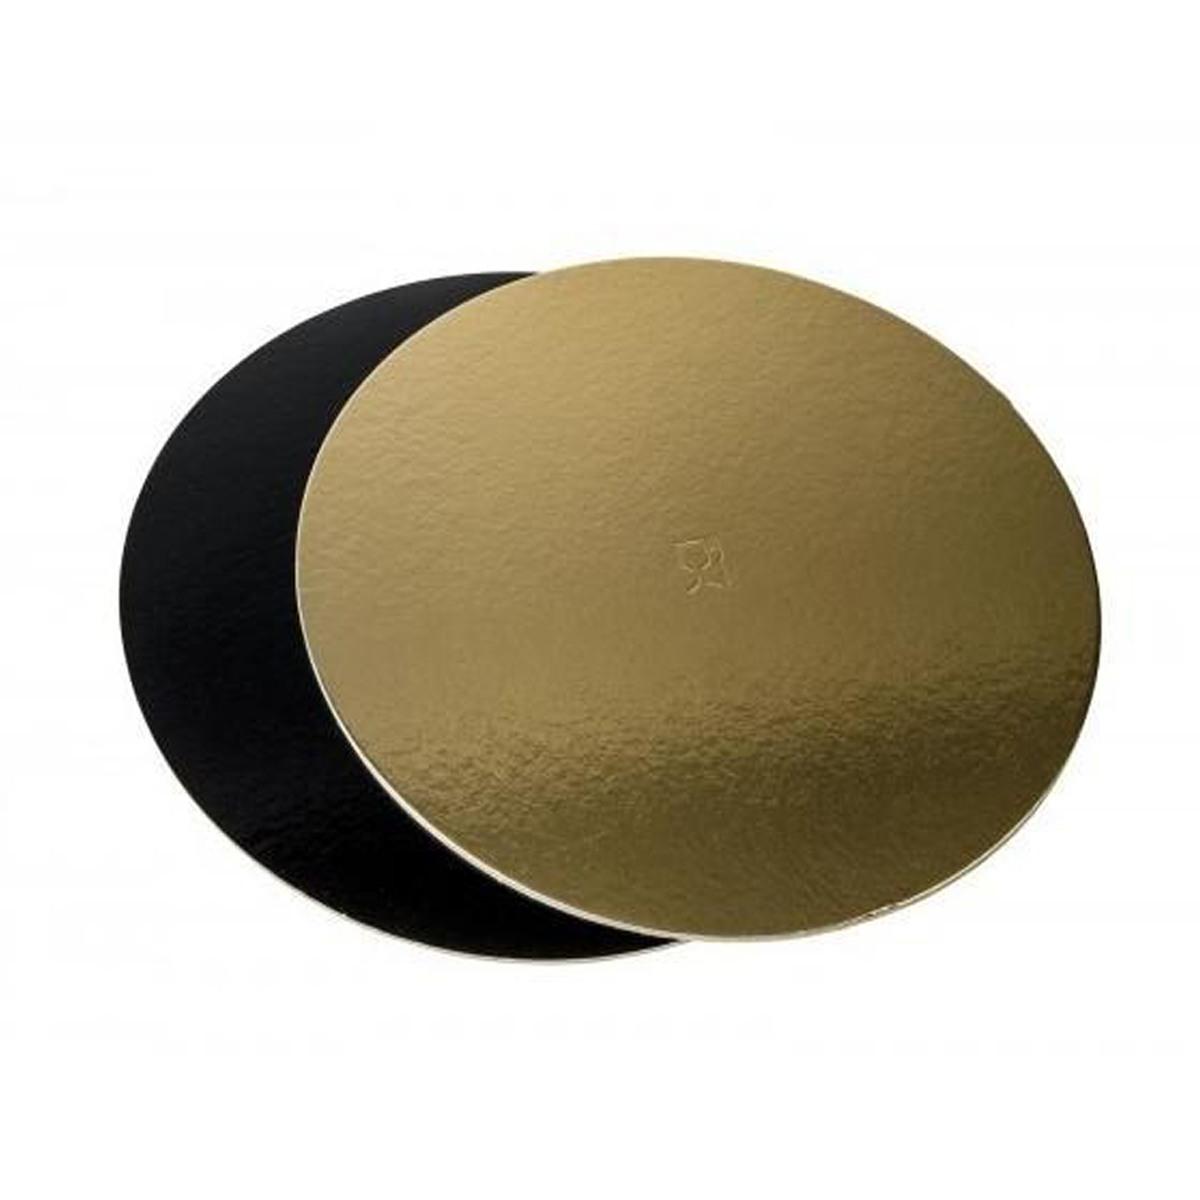 Disco nero/oro bordo liscio 10 kg n36